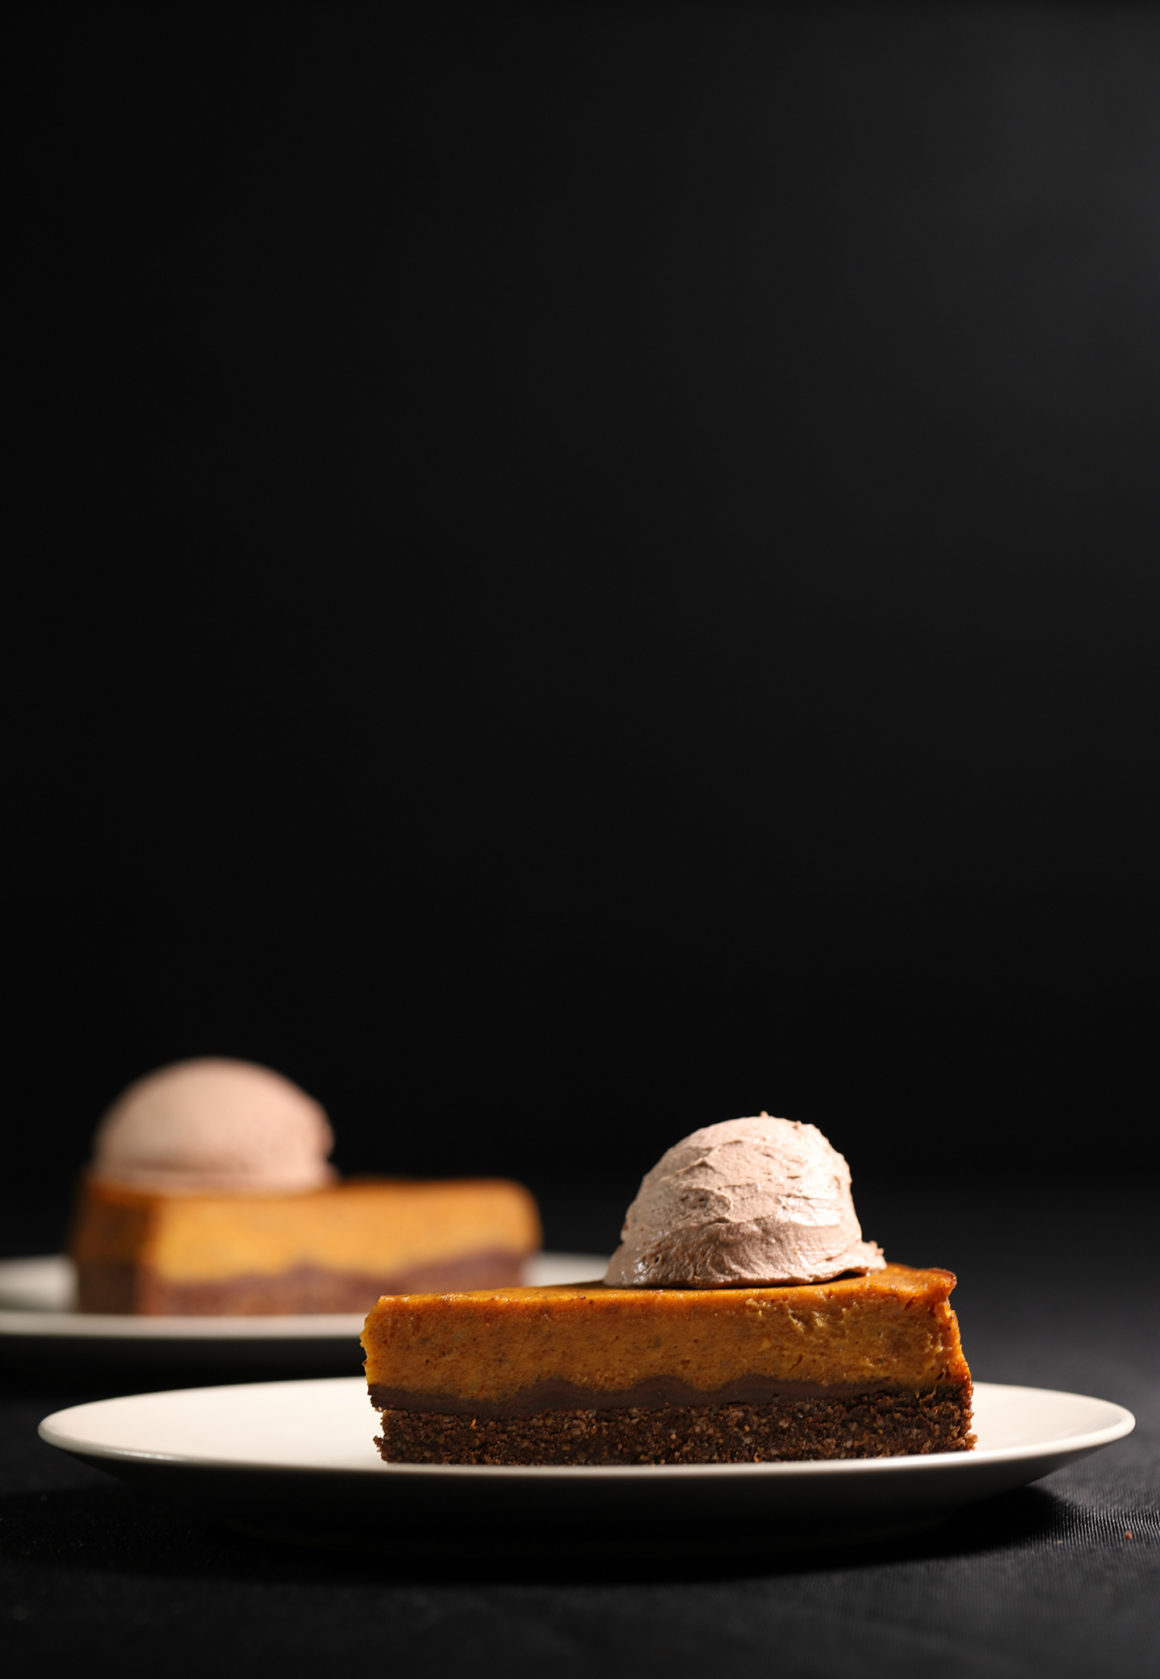 Pumpkin-Tart with Chocolate Whipped Cream